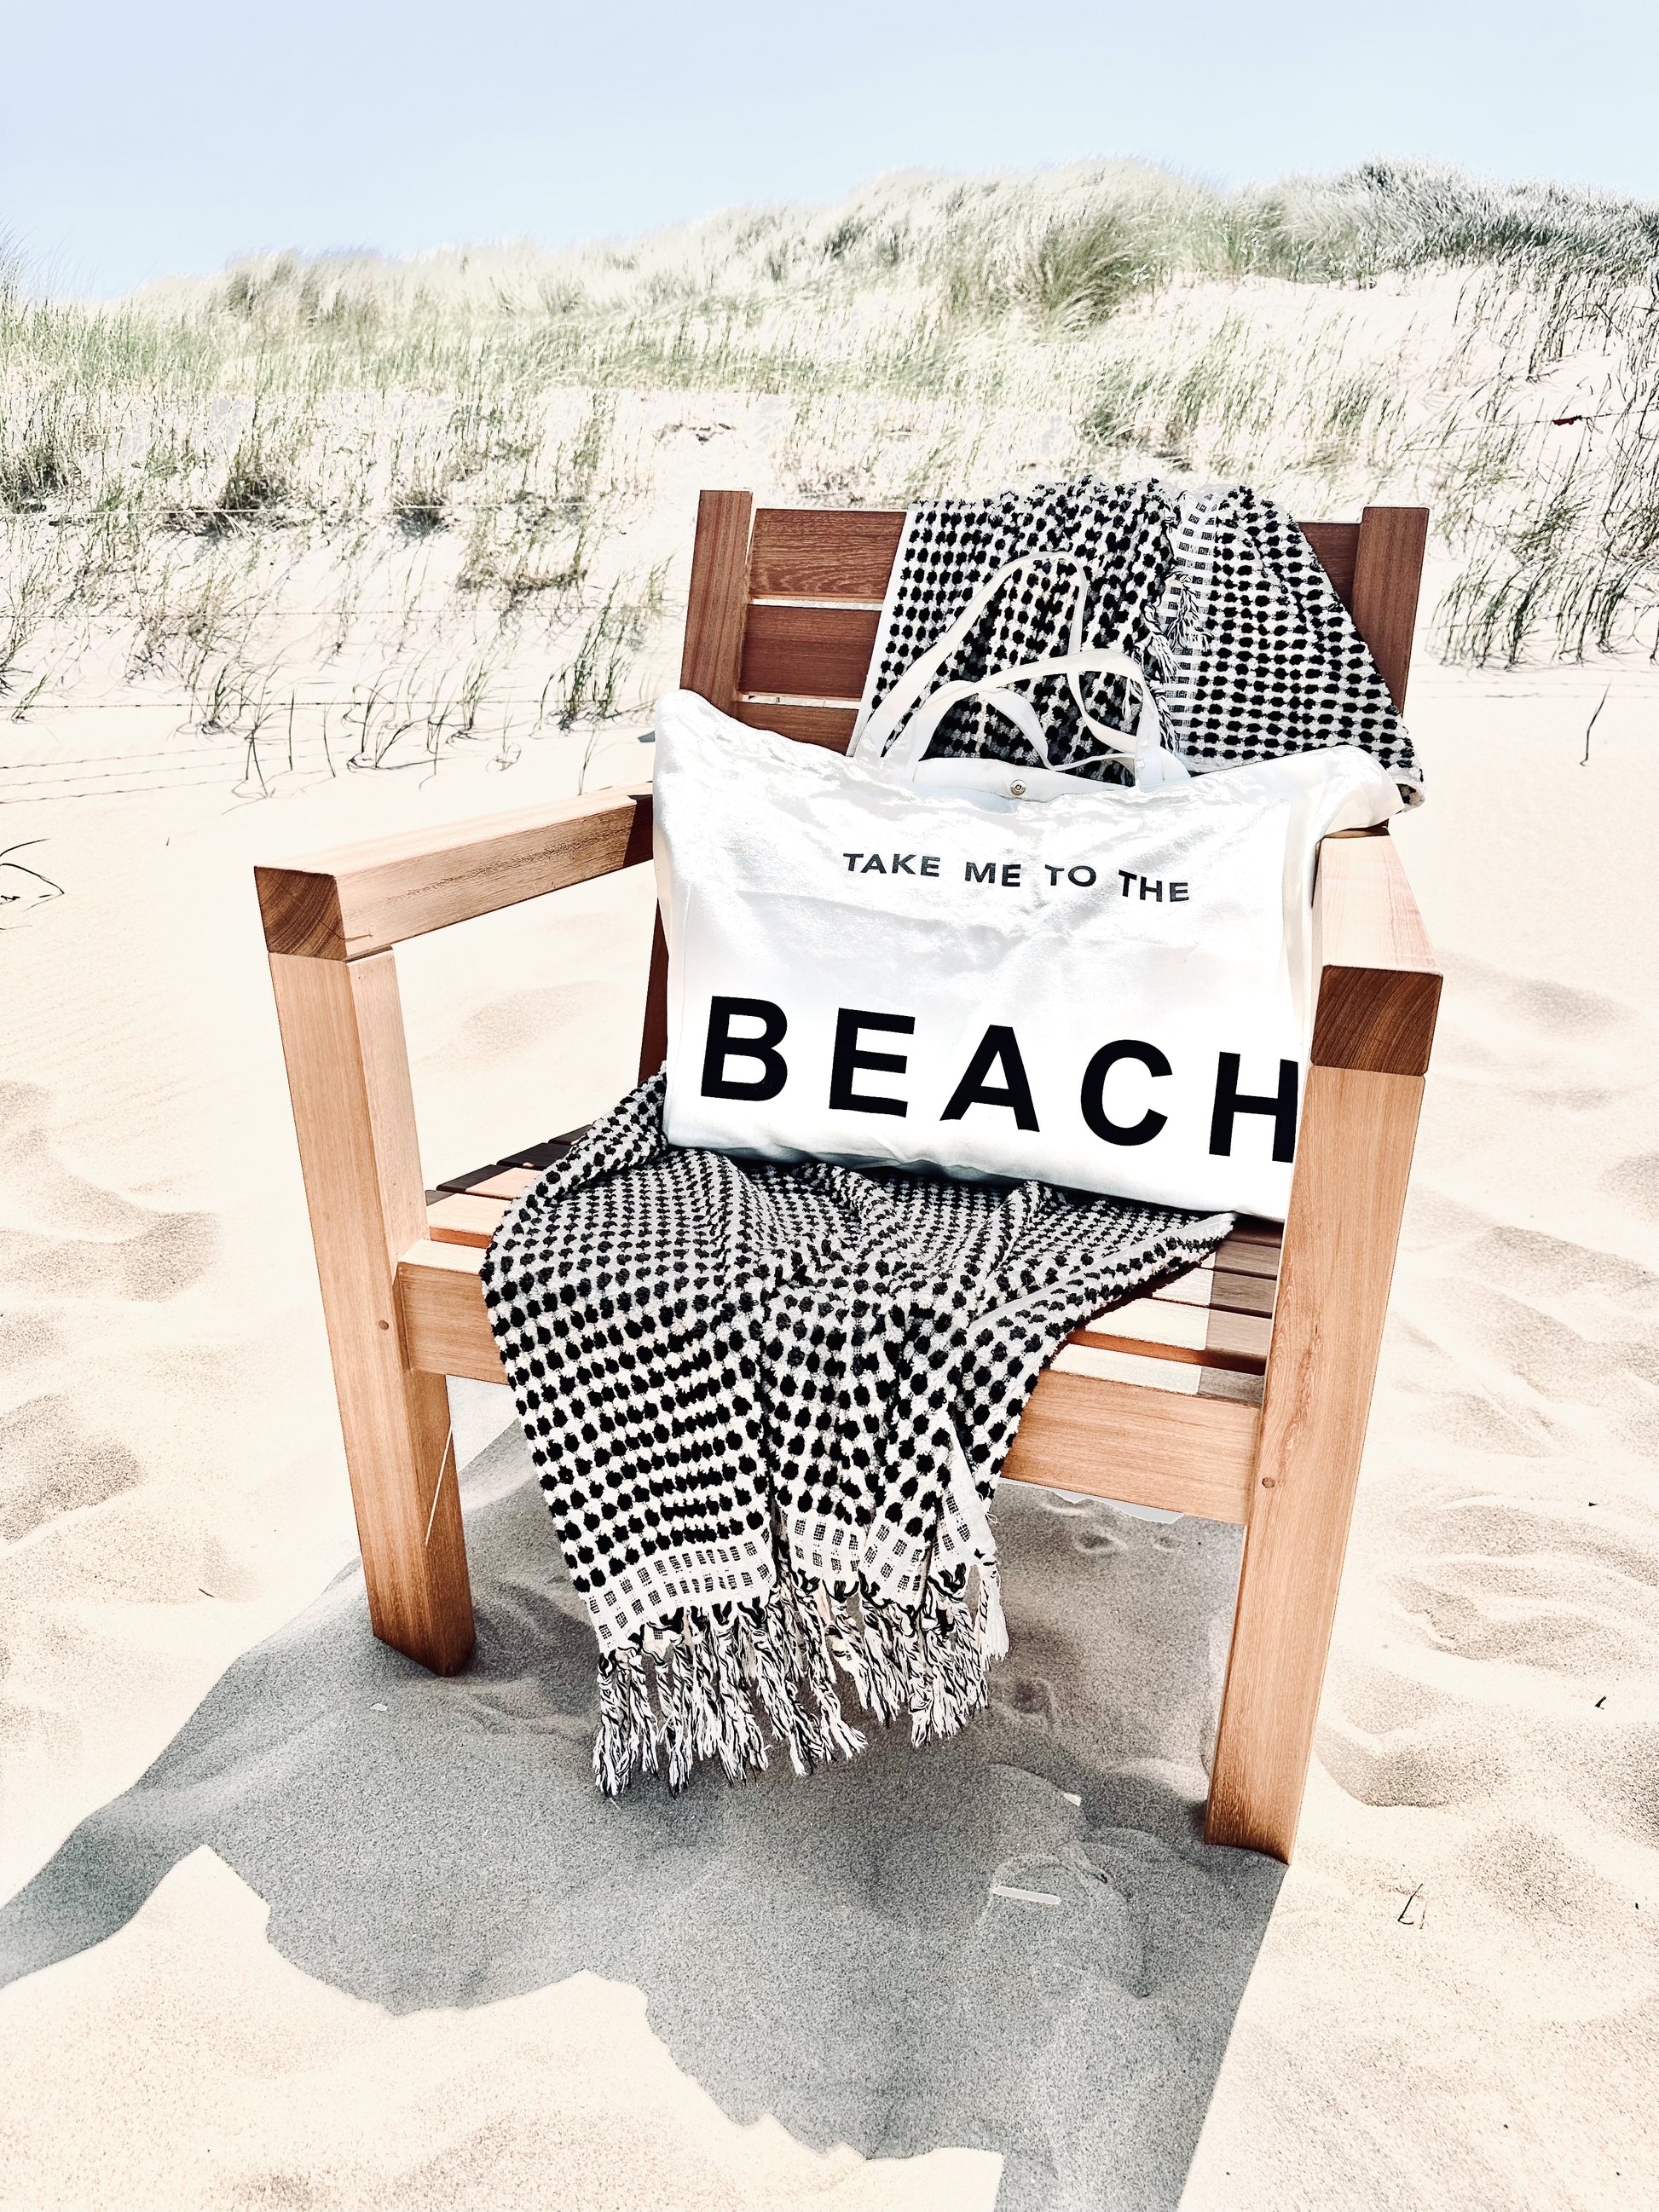 huisje van sanne turkse strandhanddoek zwart wit hoge kwaliteit